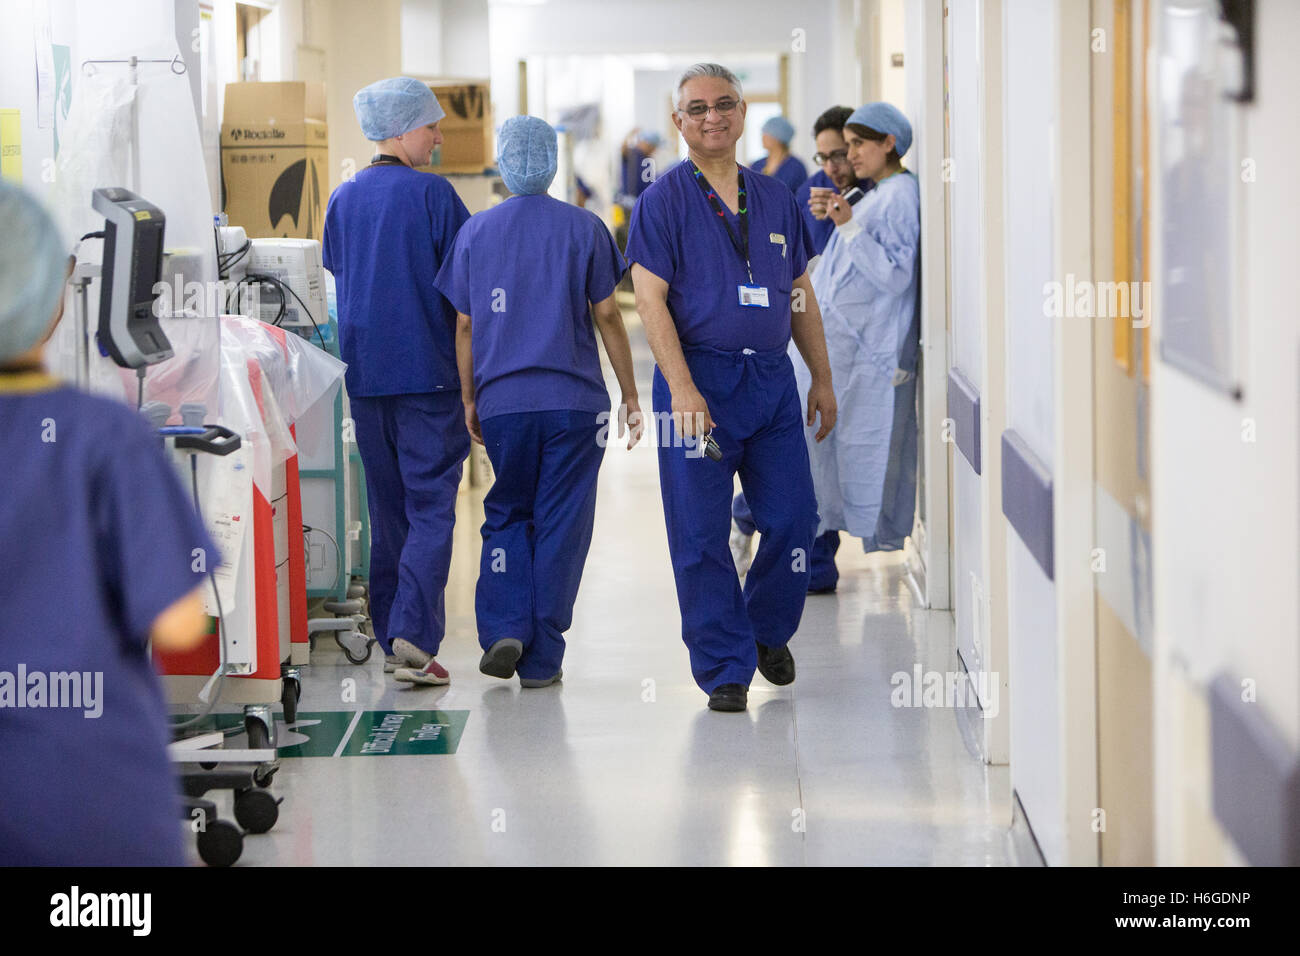 Doctors,nurses and surgeons in an NHS hospital corridor wearing scrubs Stock Photo